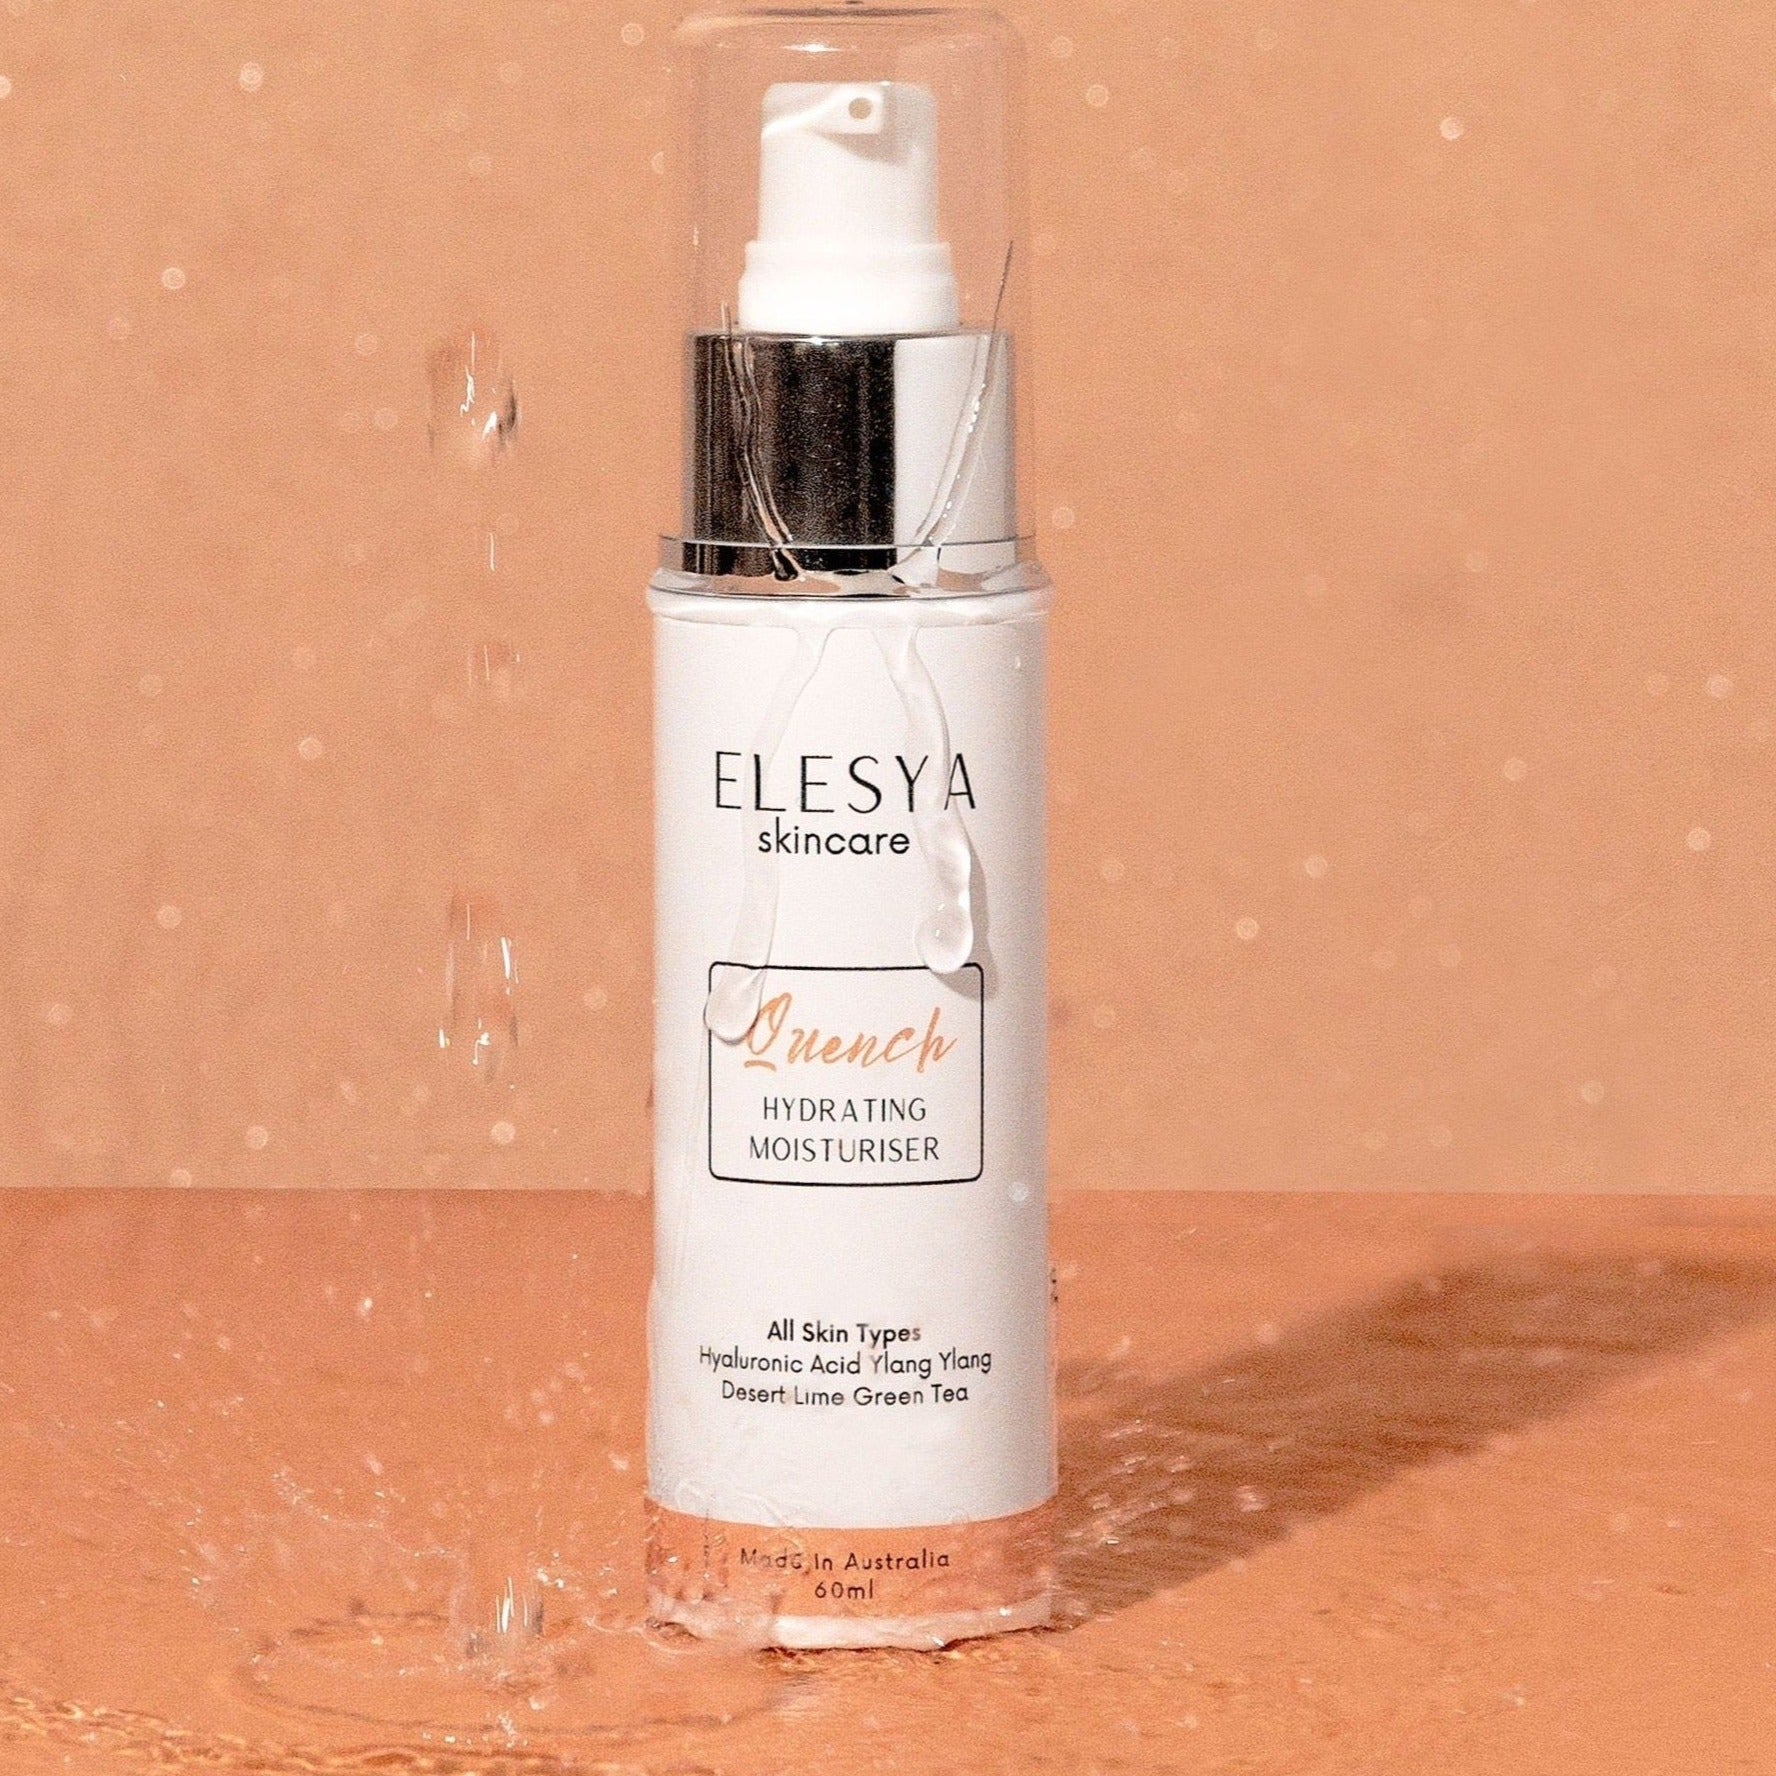 Elesya skincare - quench hydrating moisturiser - lightweight moisturiser -Australian made natural skincare - skincare for sensitive skin